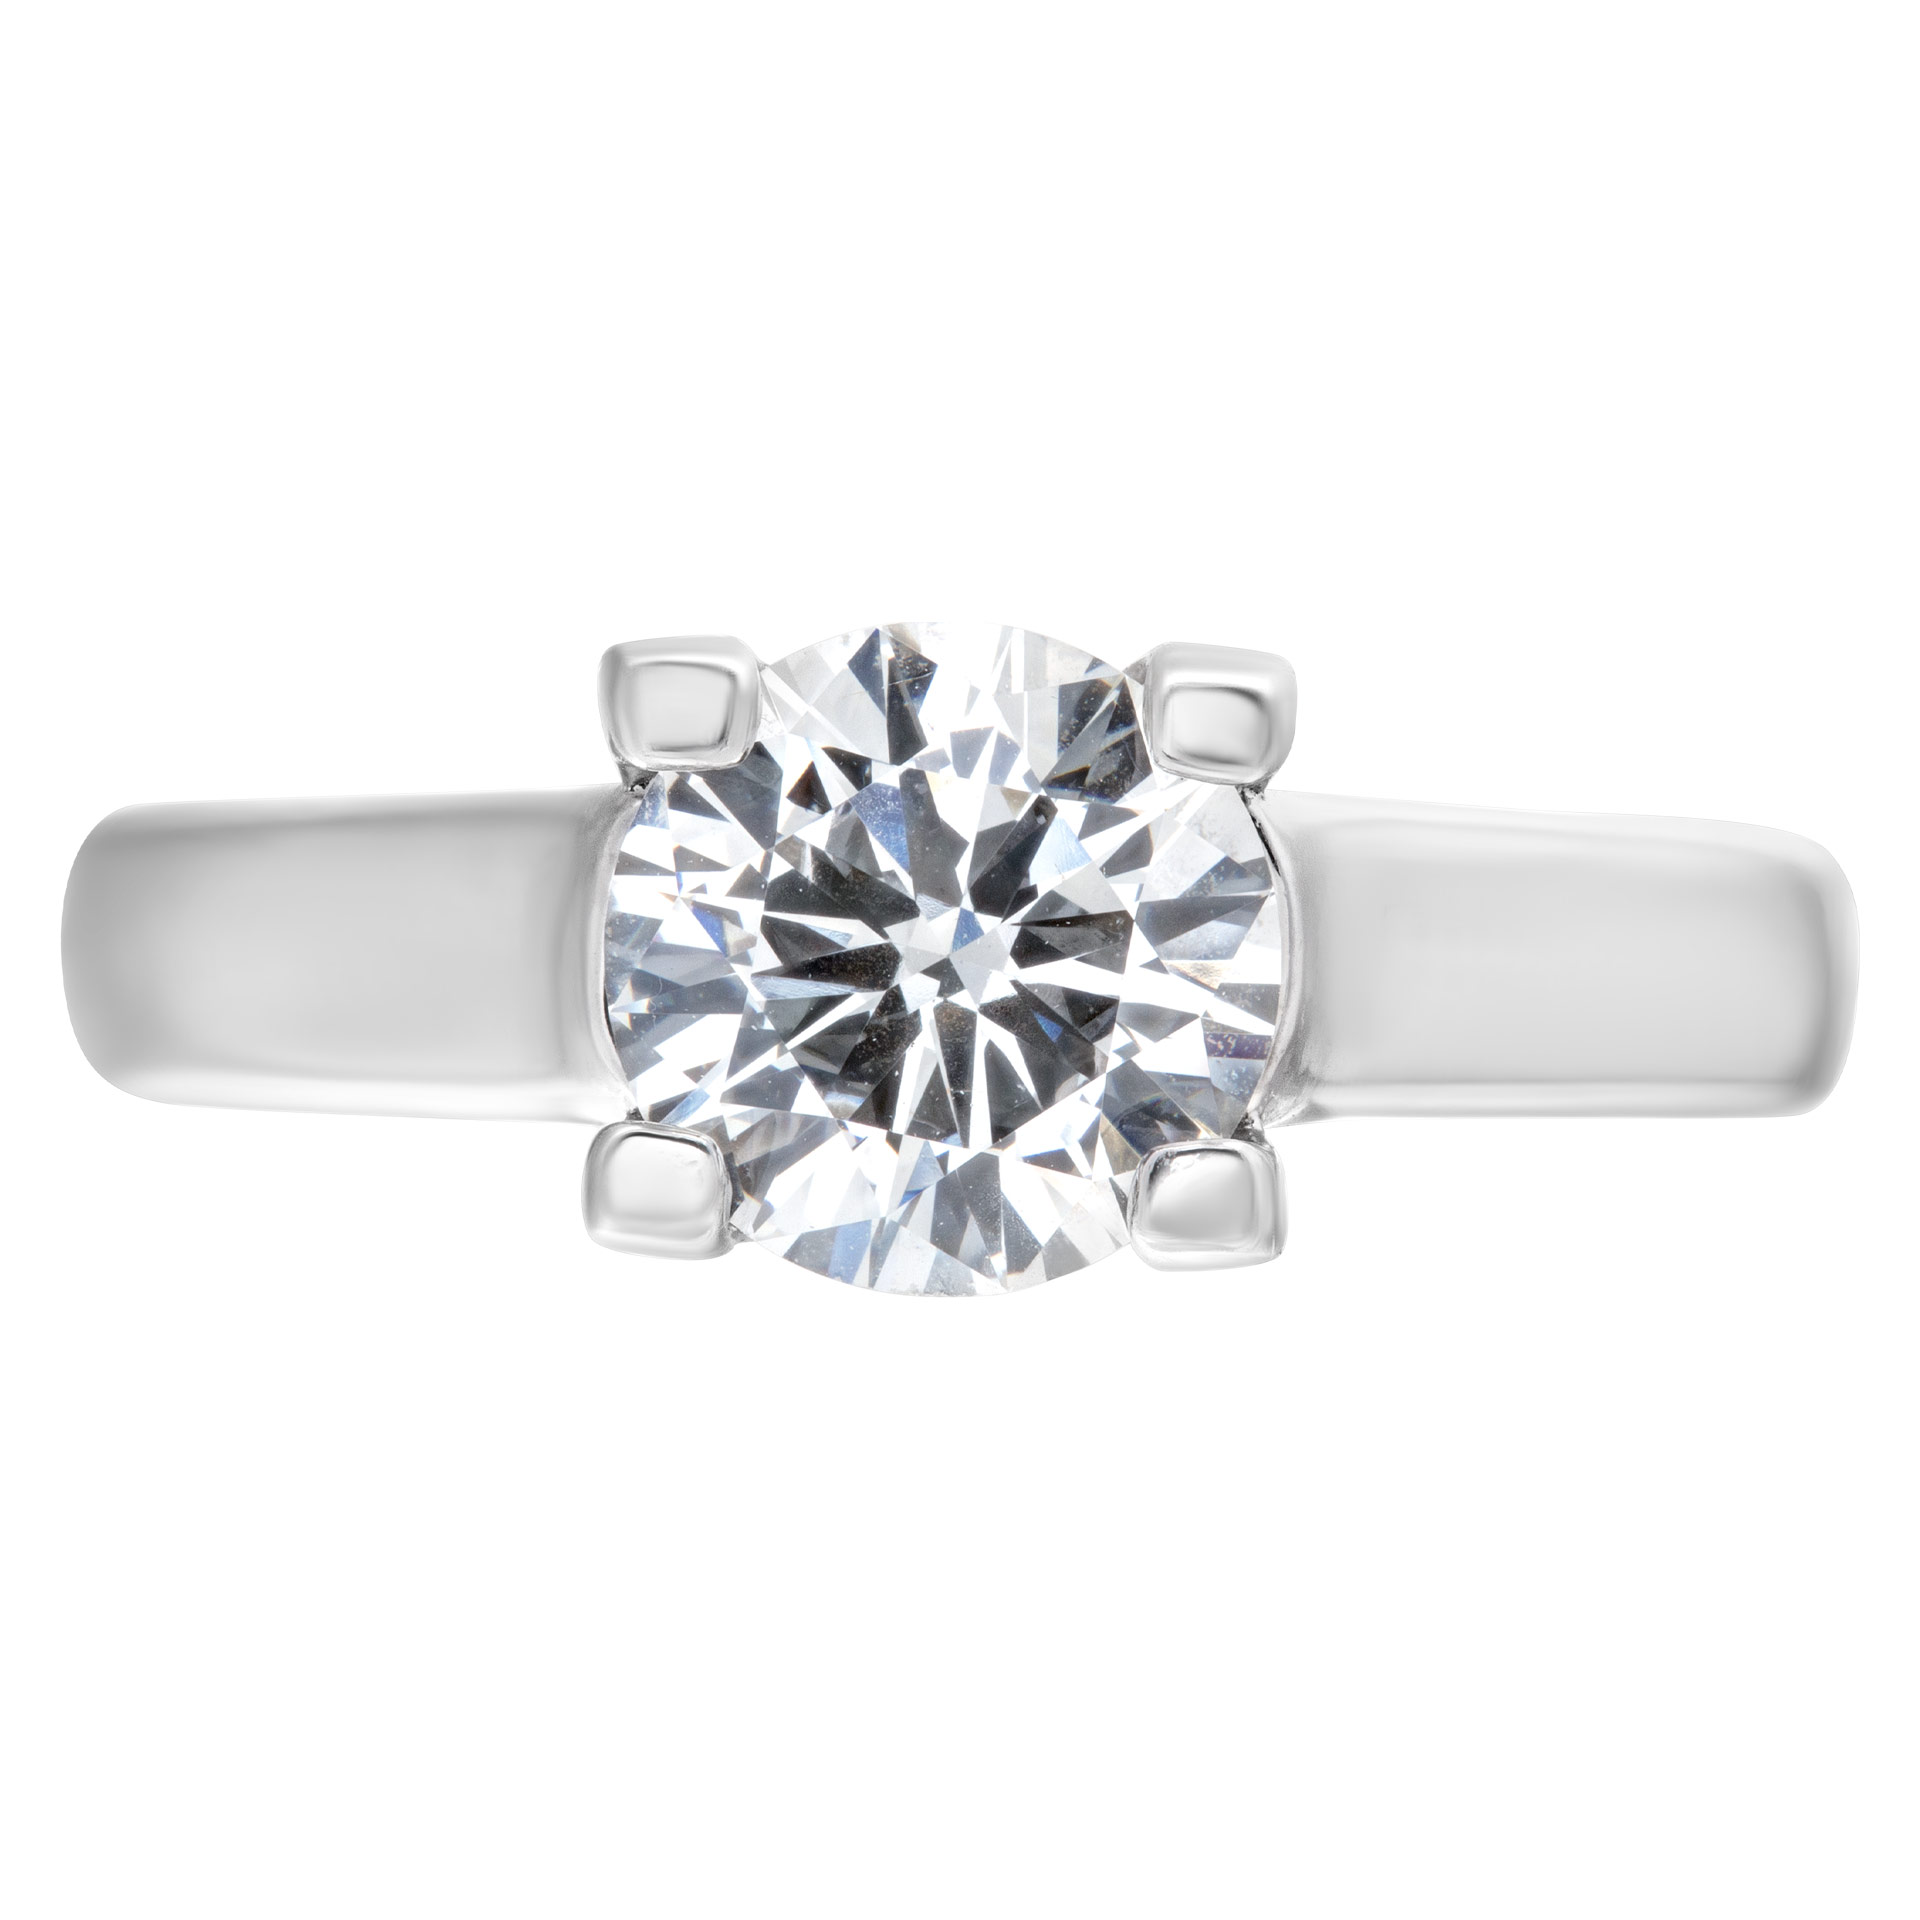 GIA certified round brilliant cut diamond 1.51 carat (I color, VS2 clarity) ring image 1